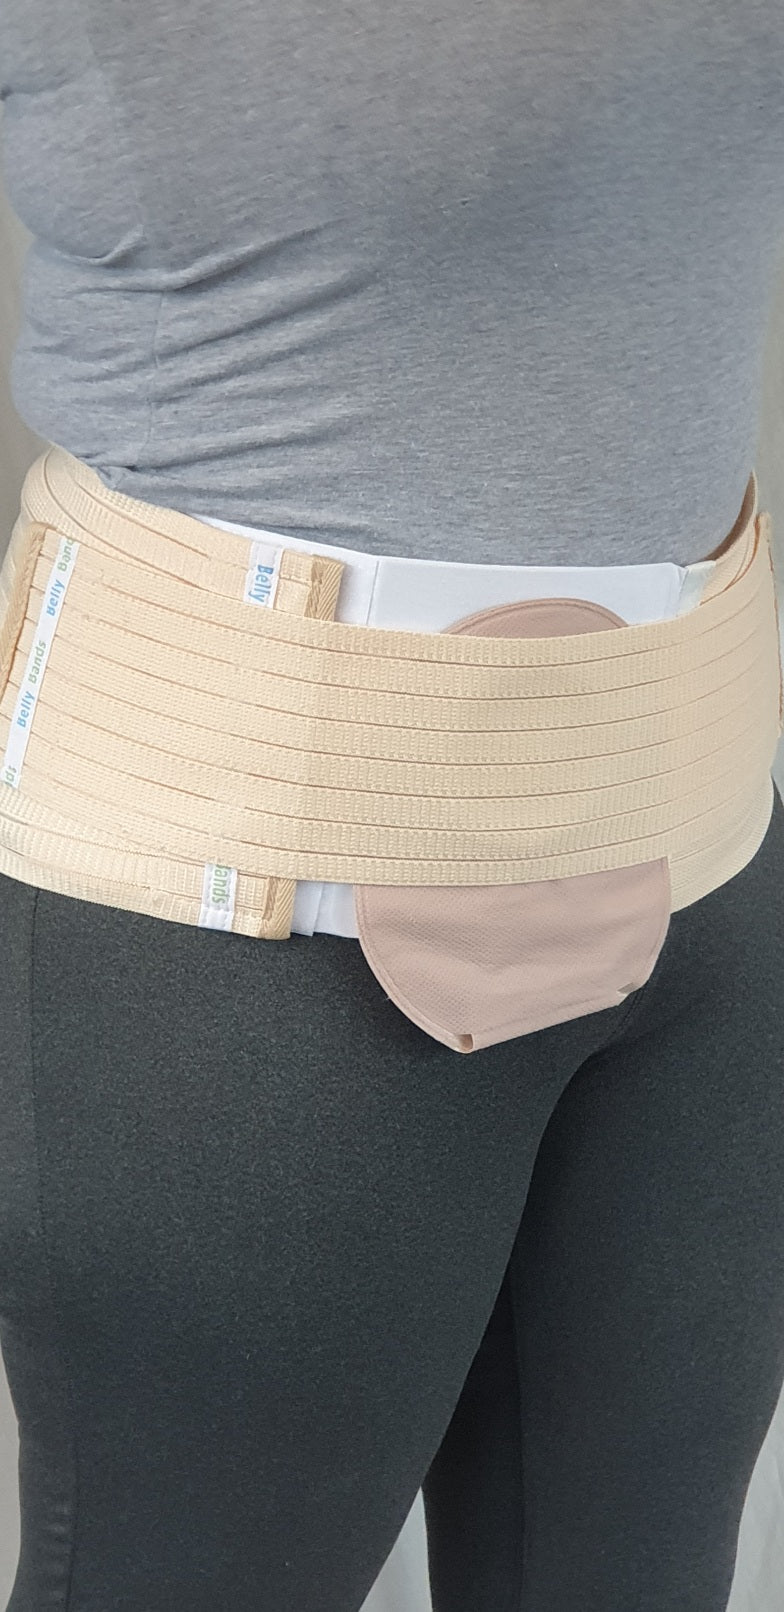 Ostomy belt with stoma bag